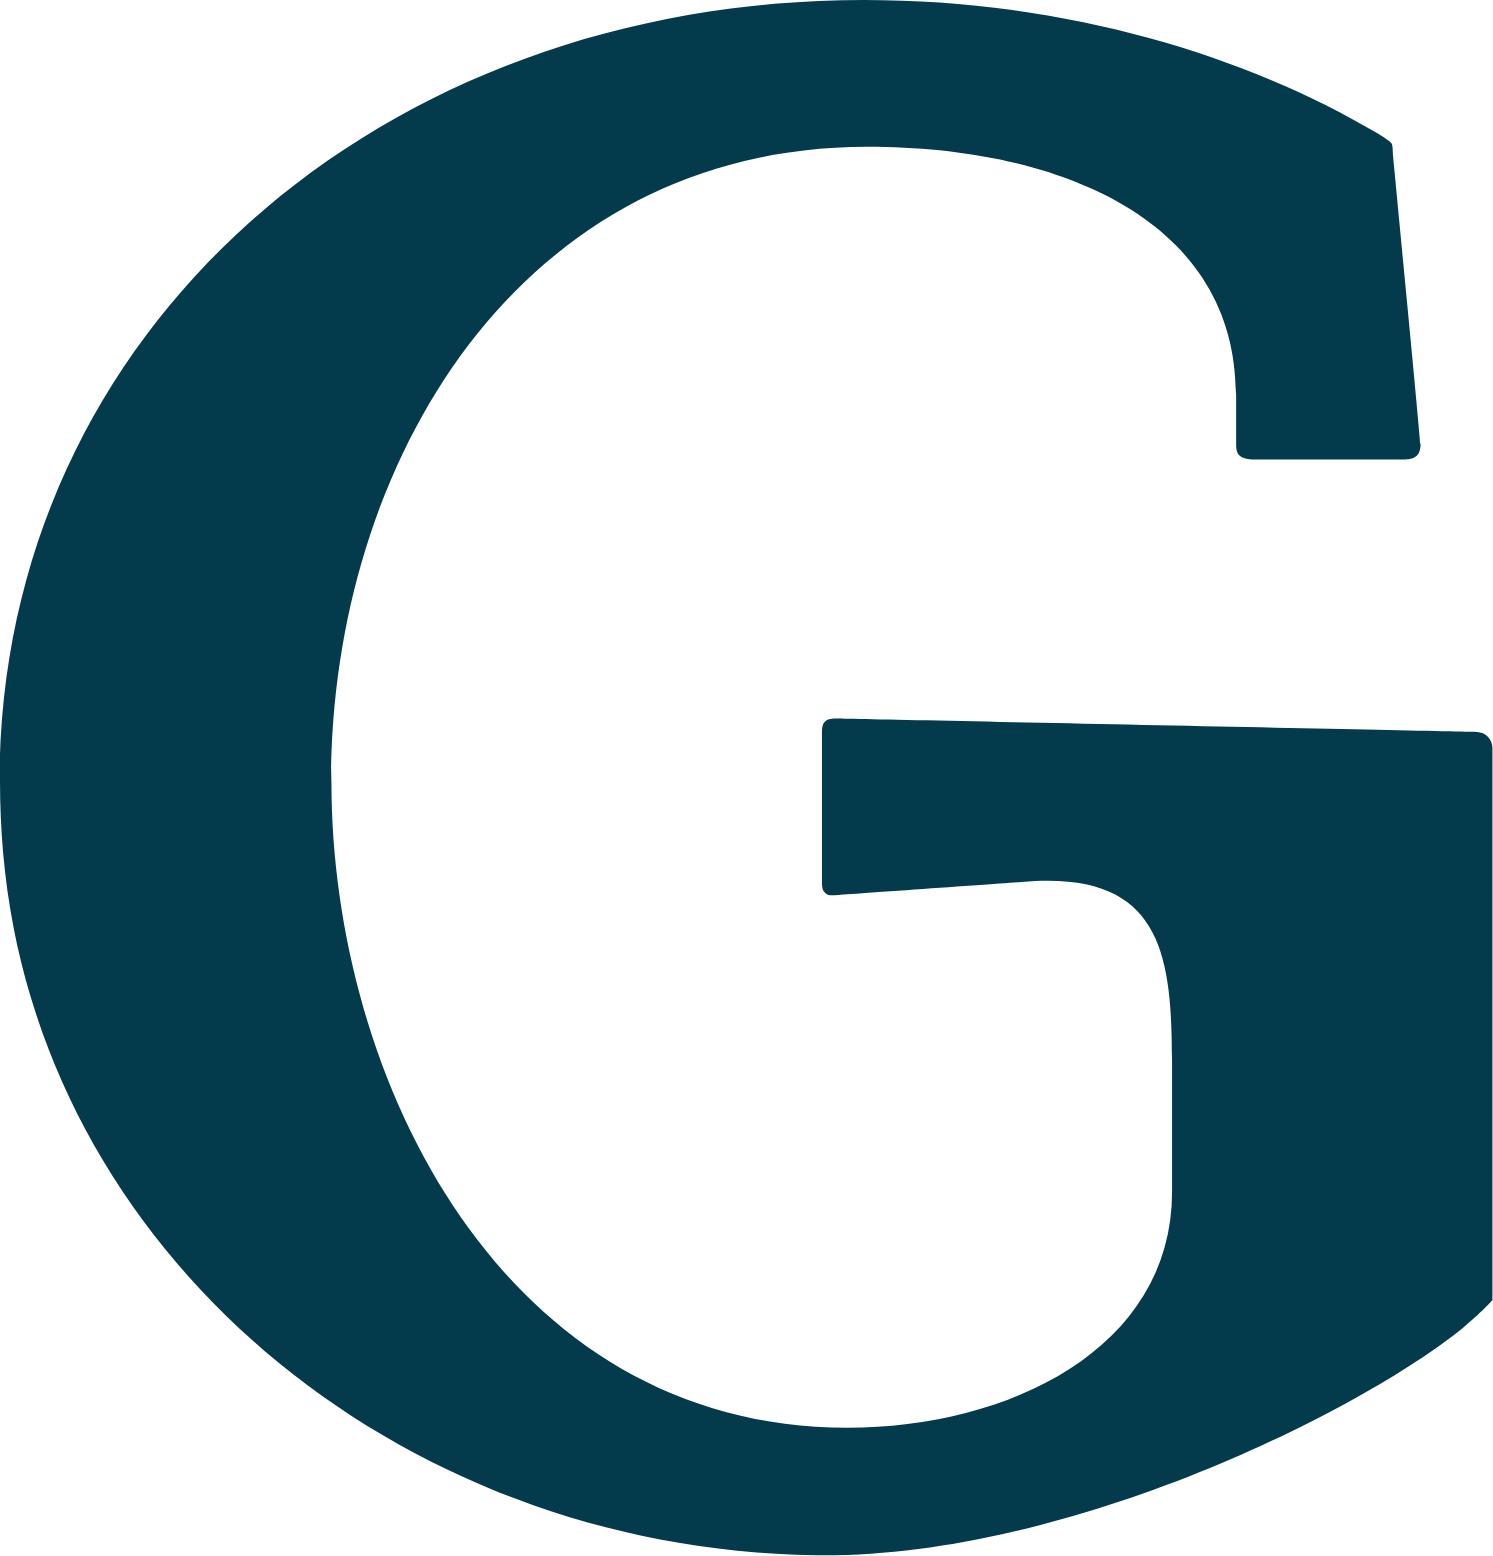 Grove Collaborative logo (transparent PNG)